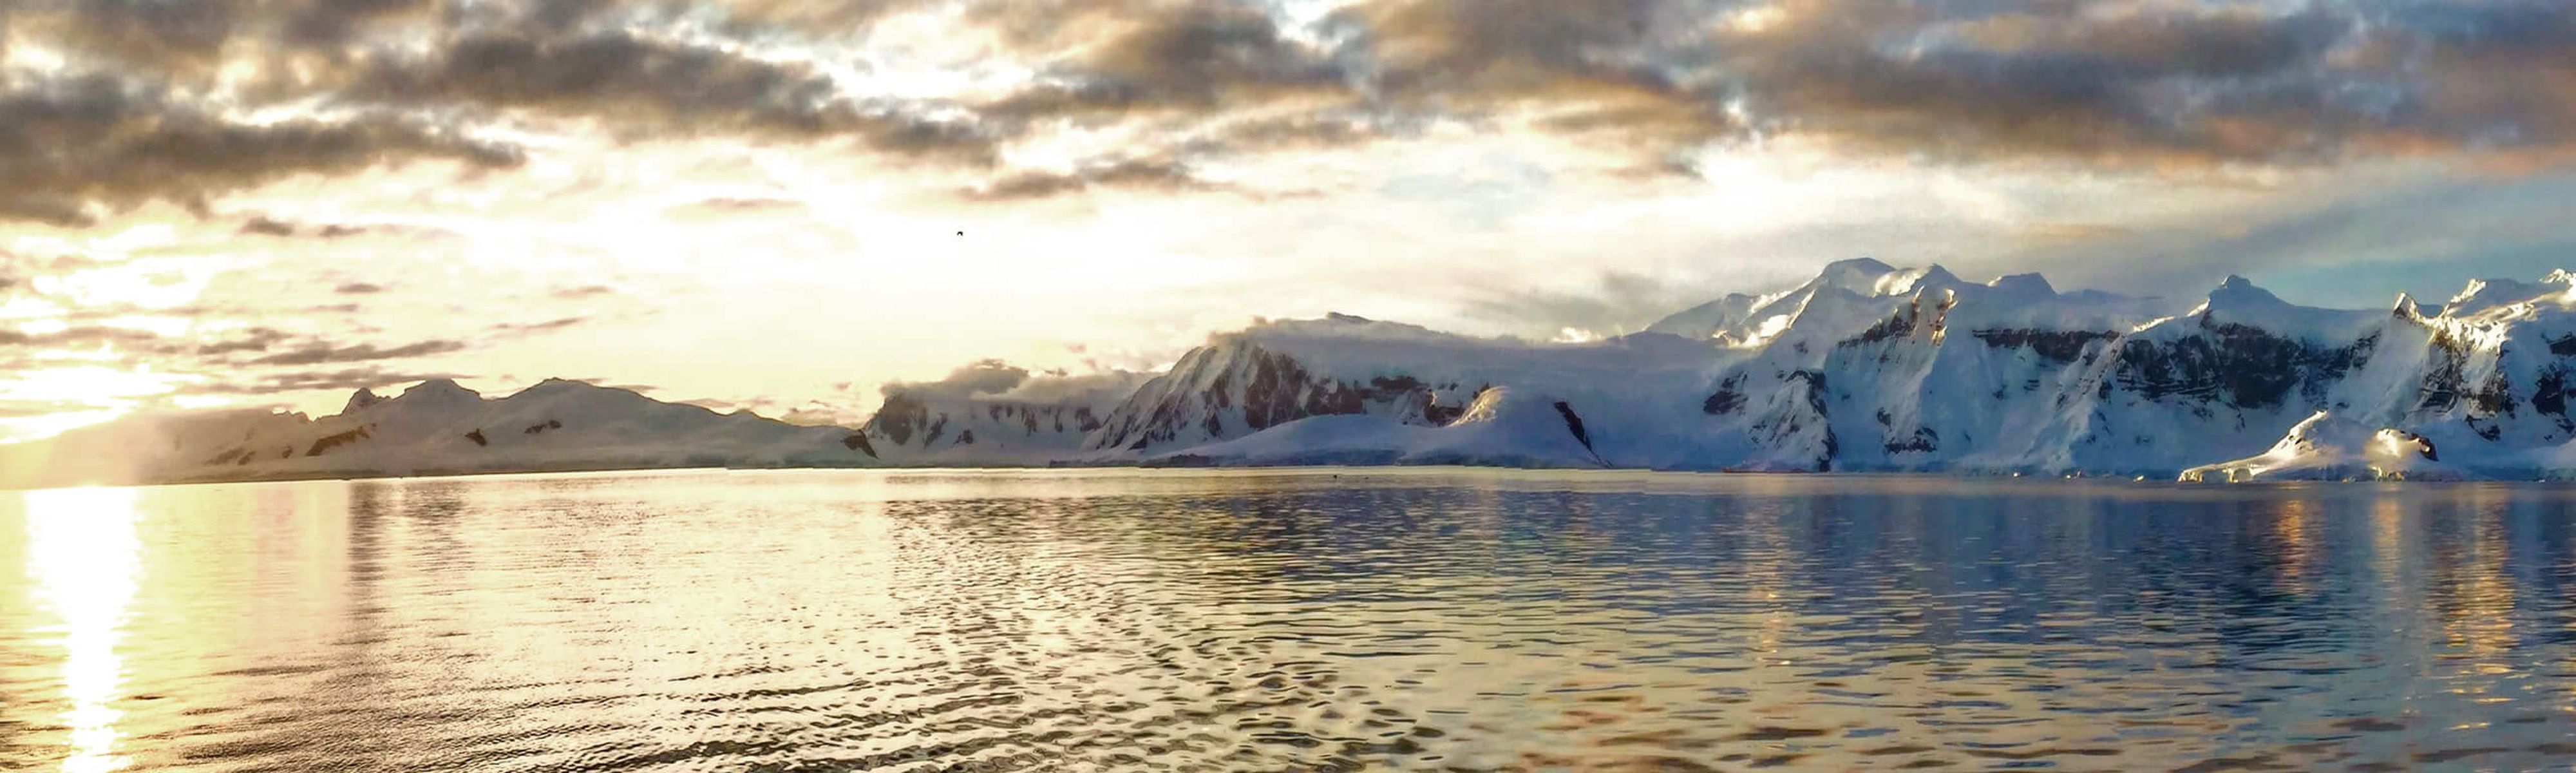 Glacier at water's edge in Antarctica